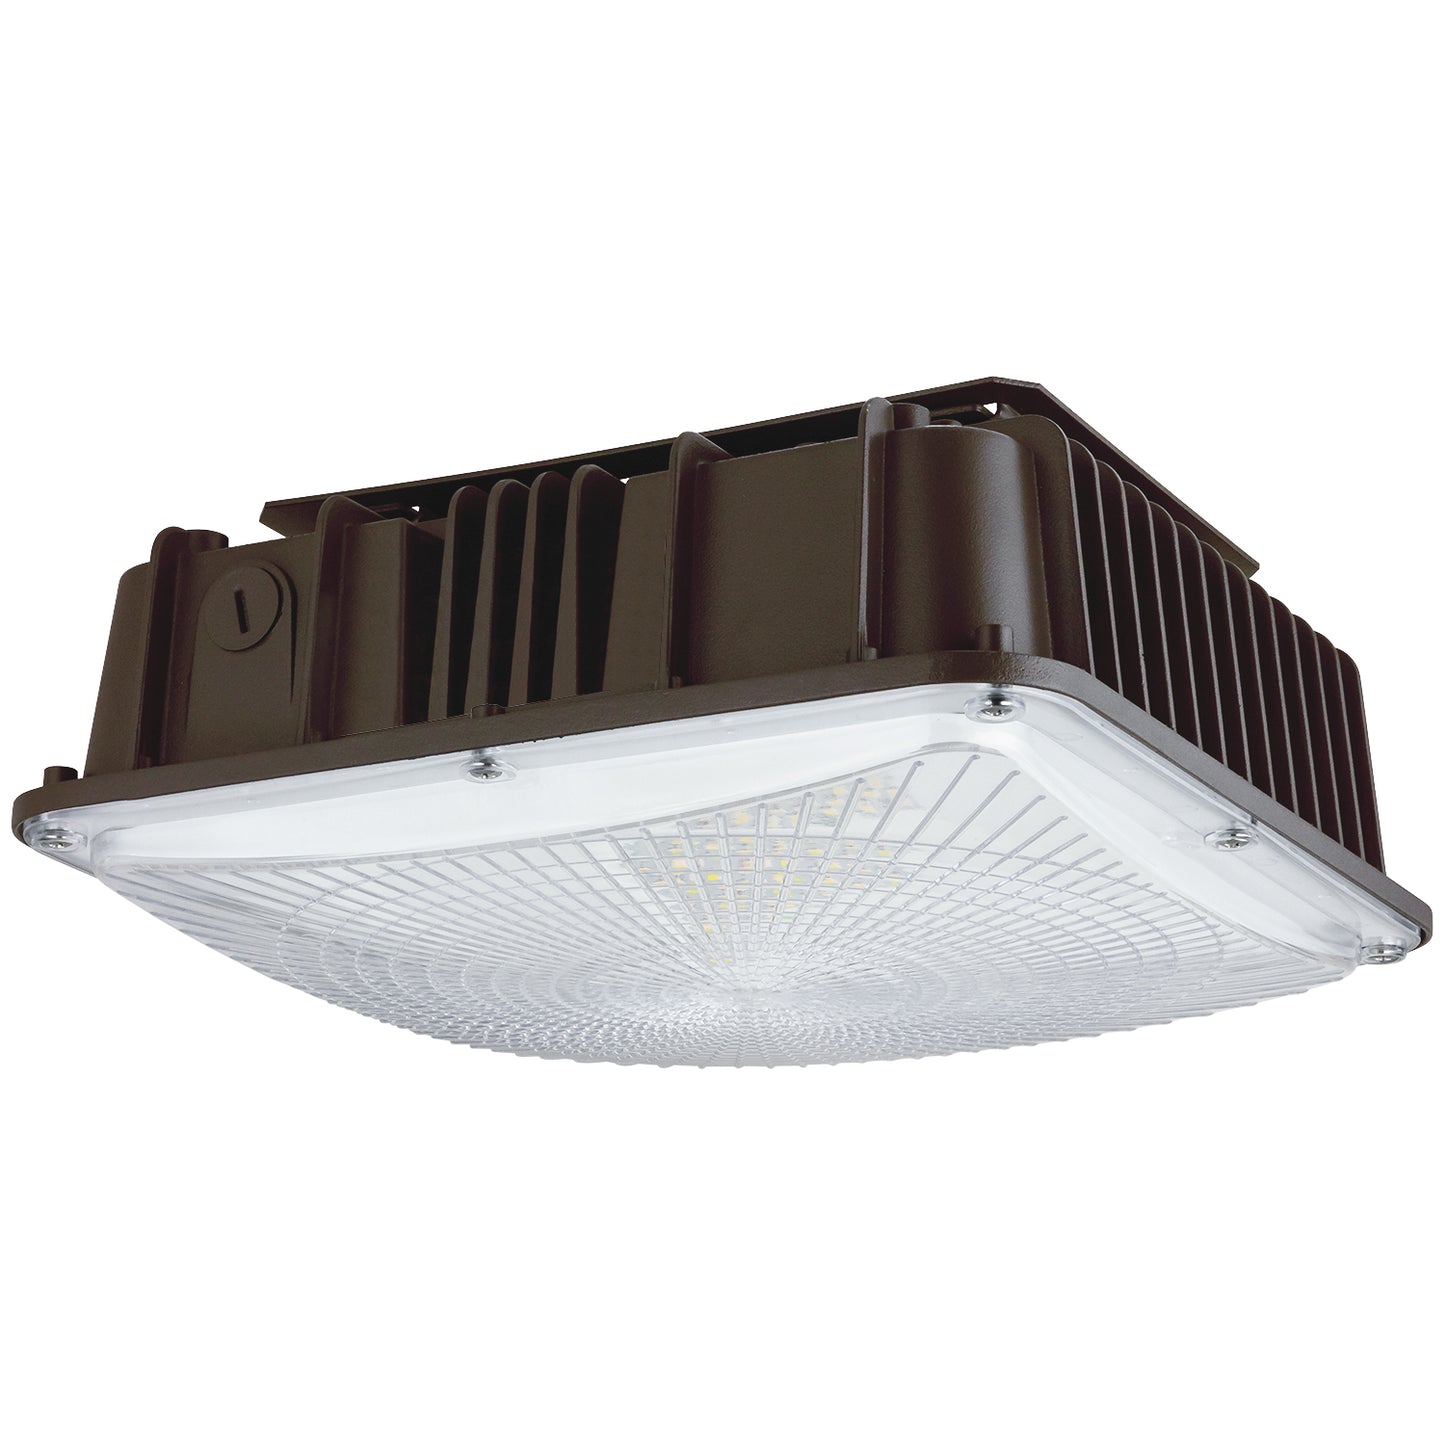 Sunlite 88129 LED Outdoor Canopy Light Fixture, 30W/40W/60W, 7800 Lumens, 30K/40K/50K, 80 CRI, ETL Listed, Bronze, for Commercial & Industrial Use